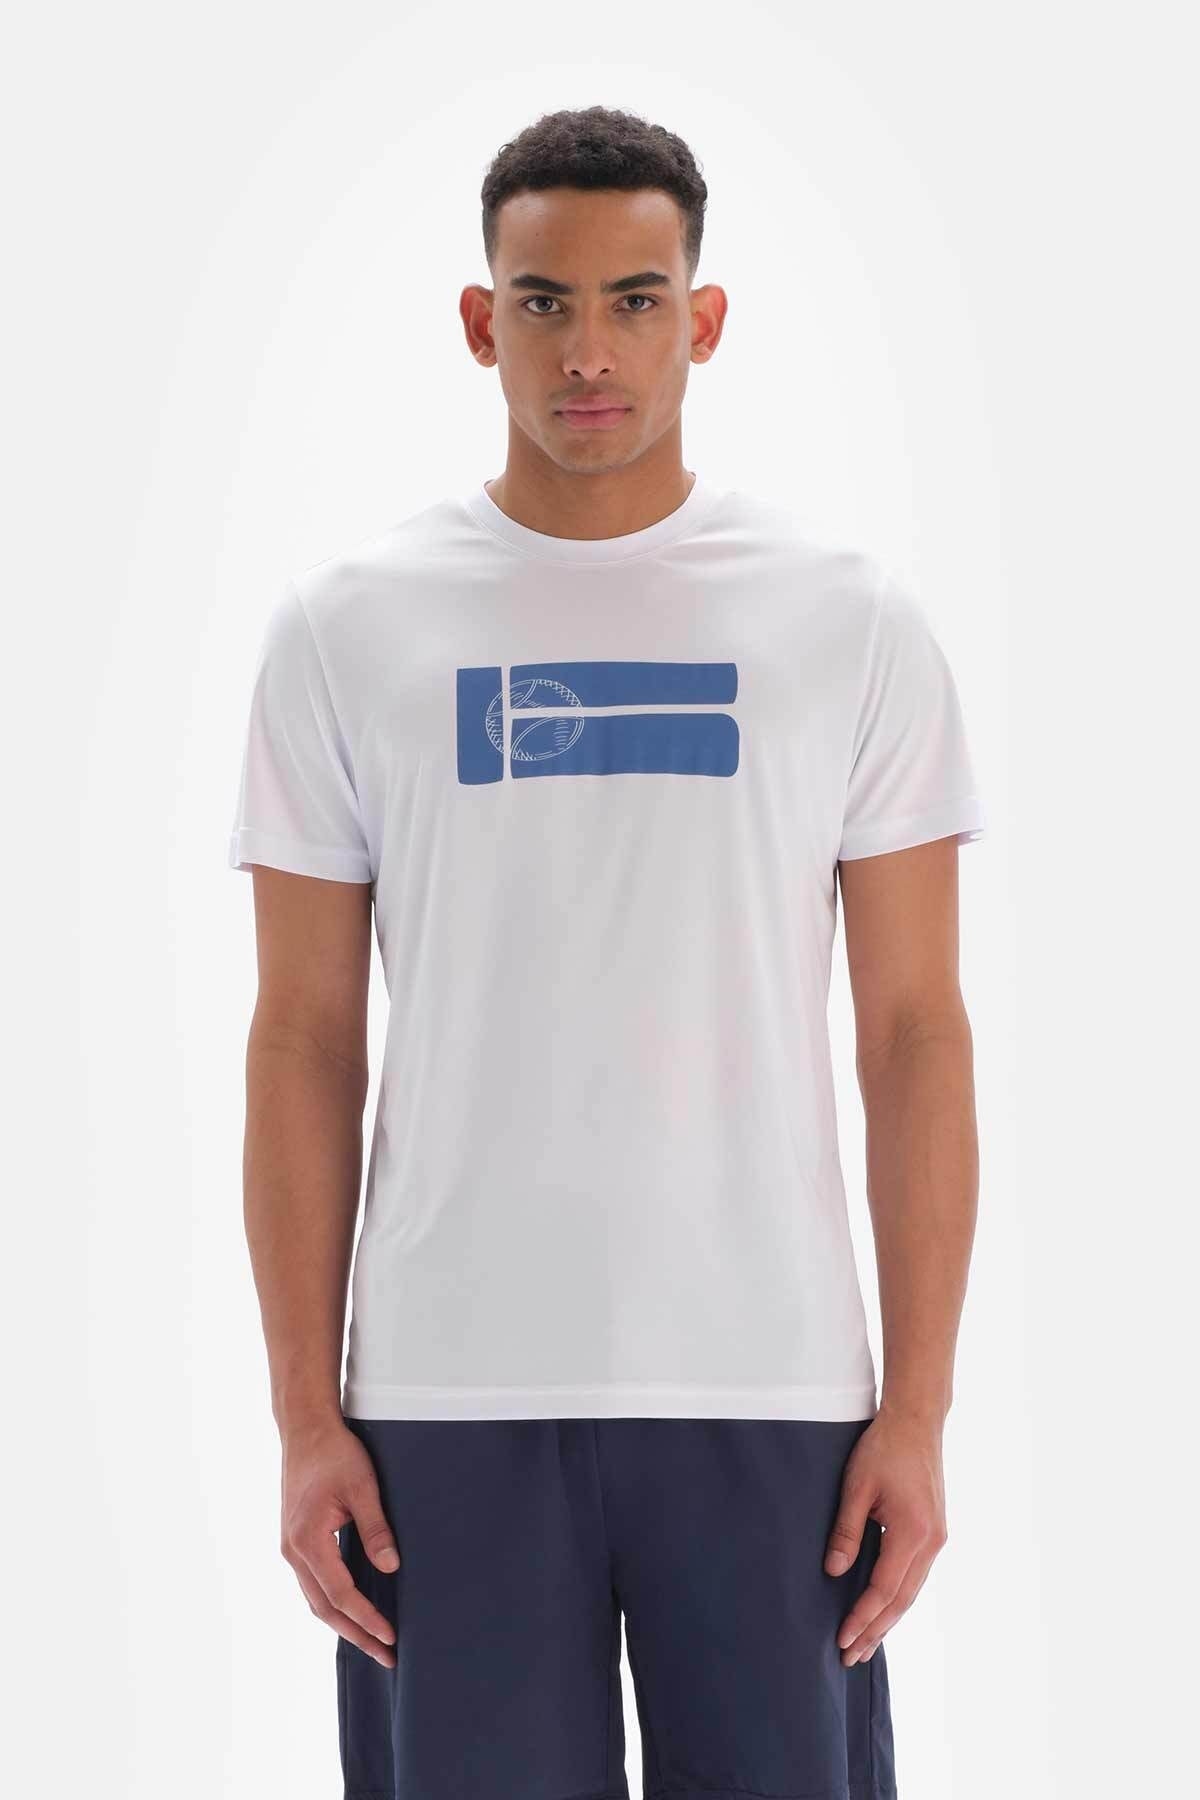 Dagi White Men's Tennis Ball Printed T-Shirt